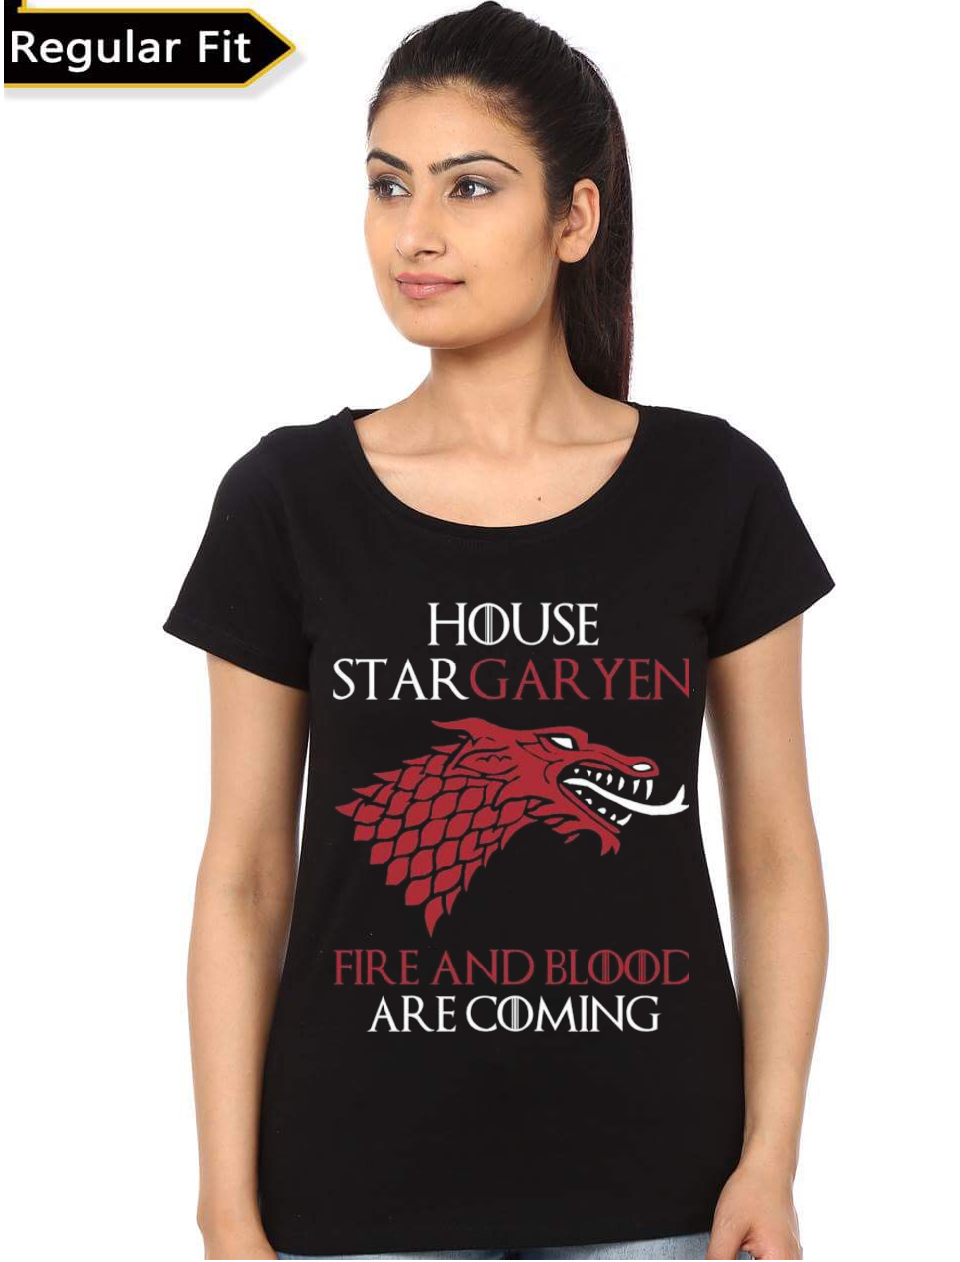 House Stargaryen Girl’s Black T-Shirt | Swag Shirts